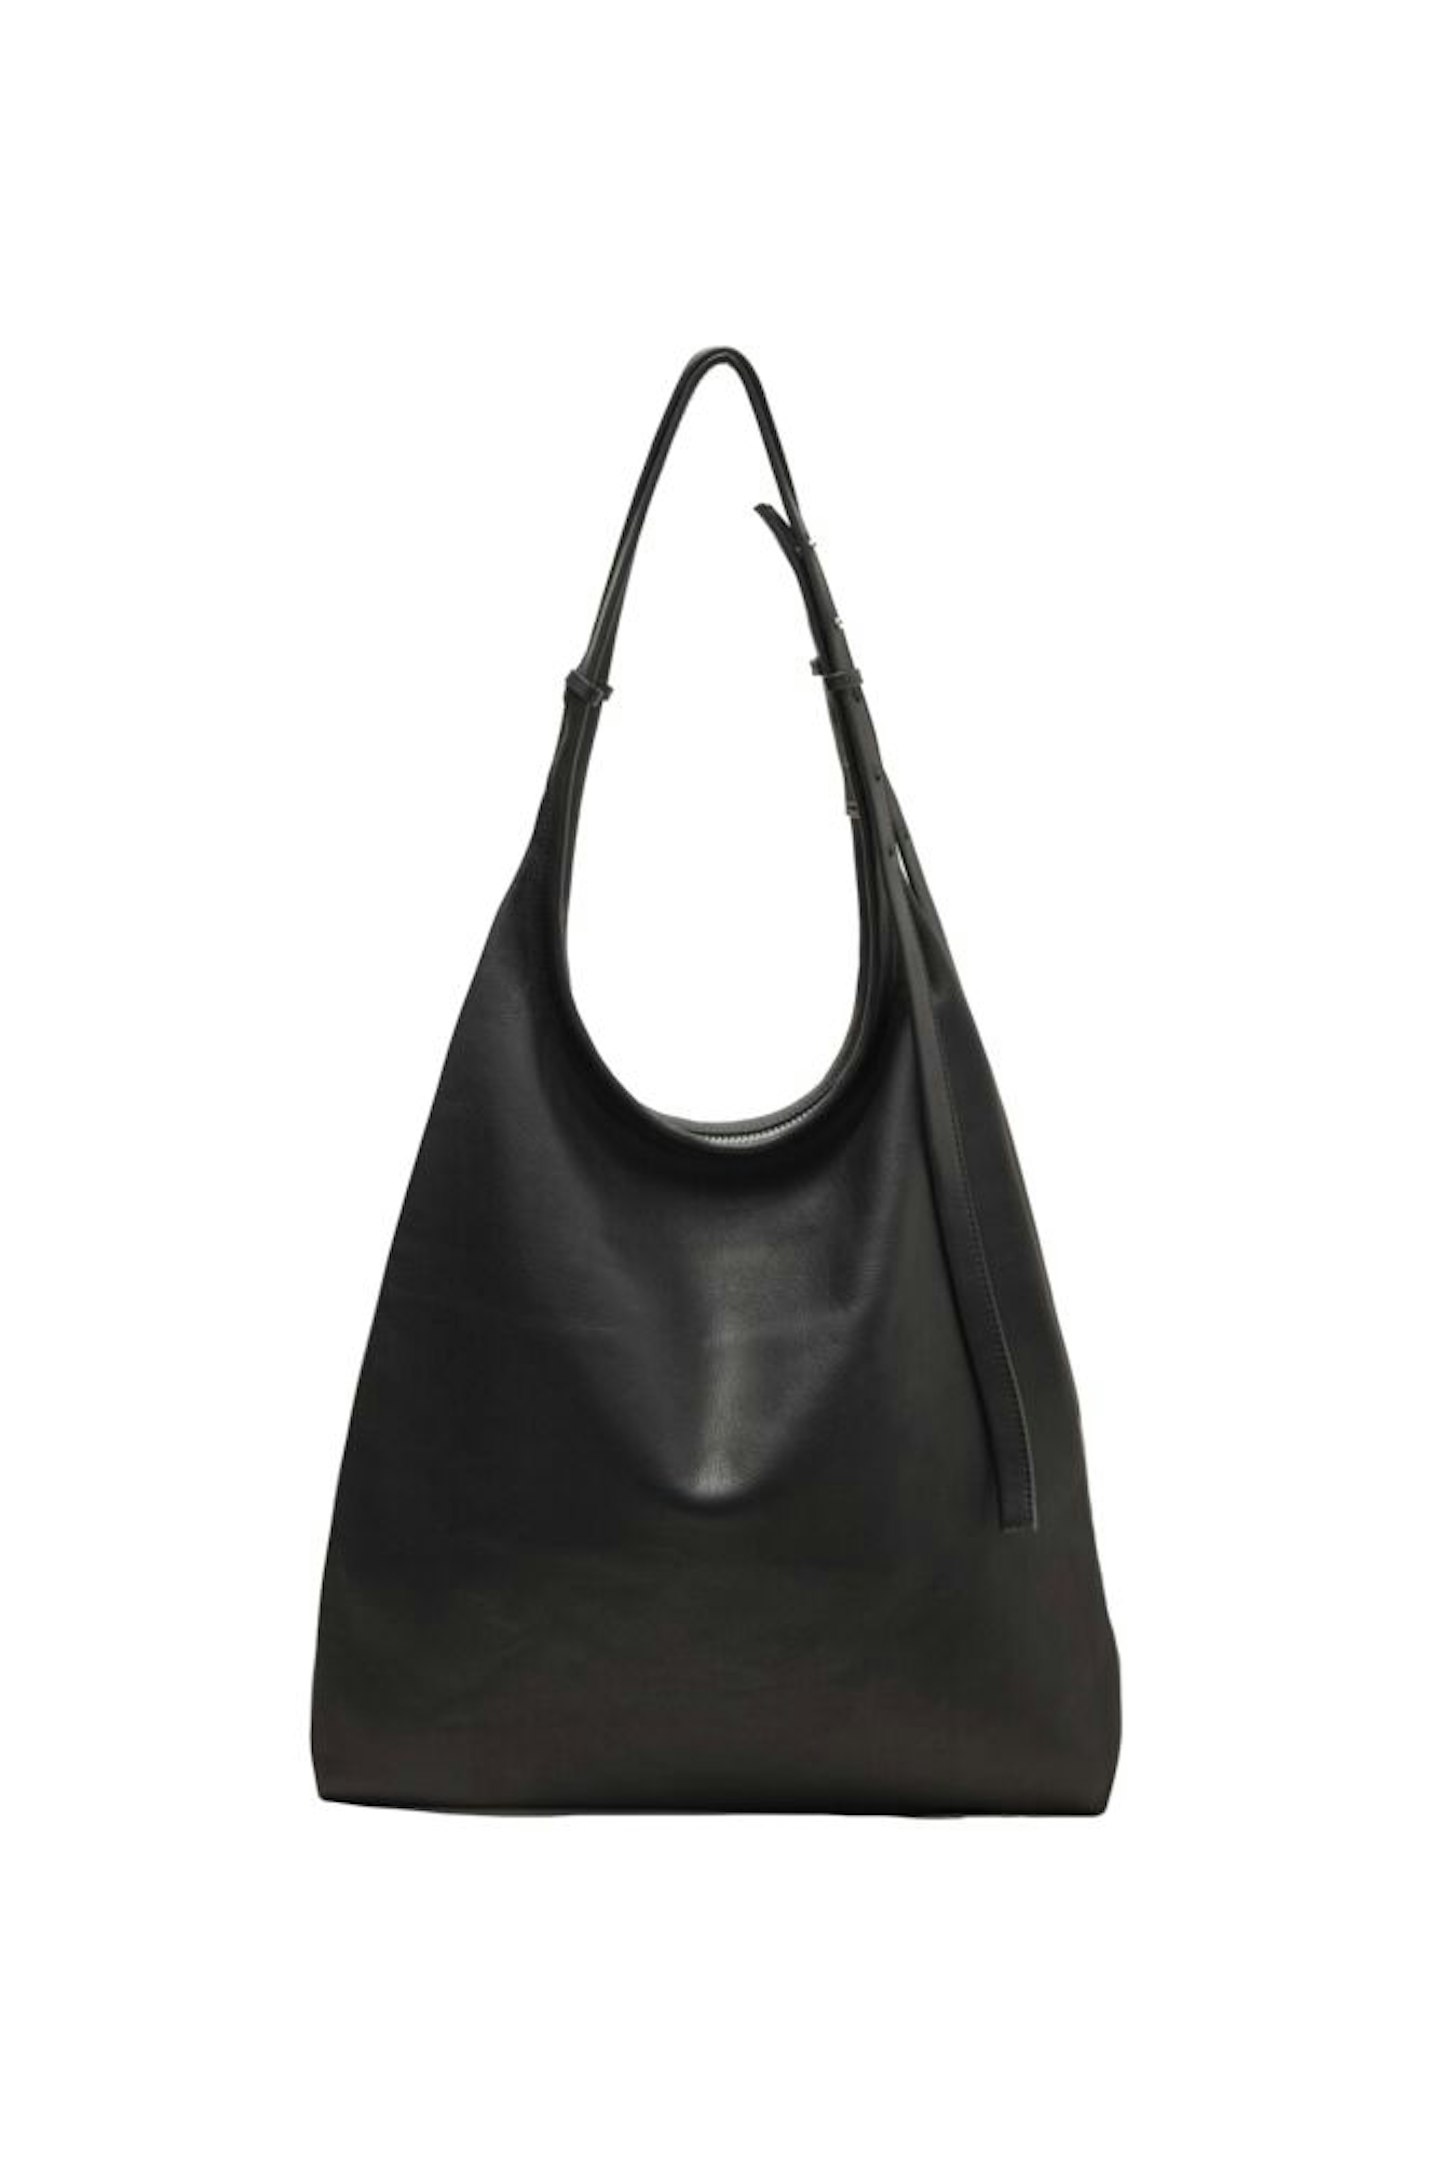 COS, Leather Shopper Bag, £150